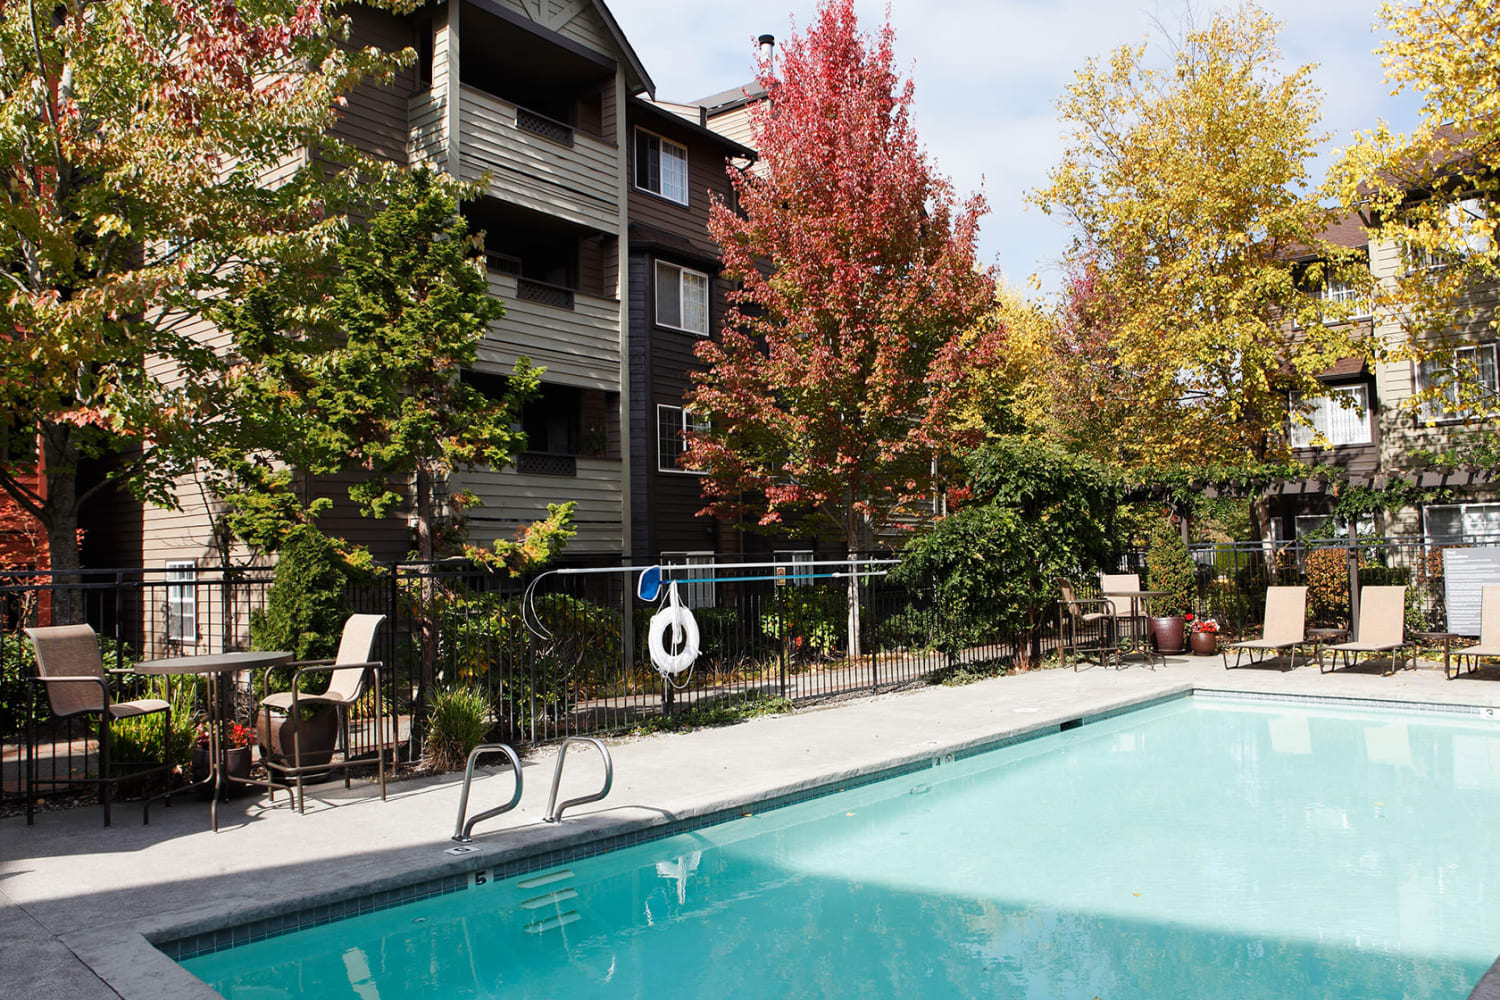 Beautiful swimming pool at Redmond Place Apartments in Redmond, Washington